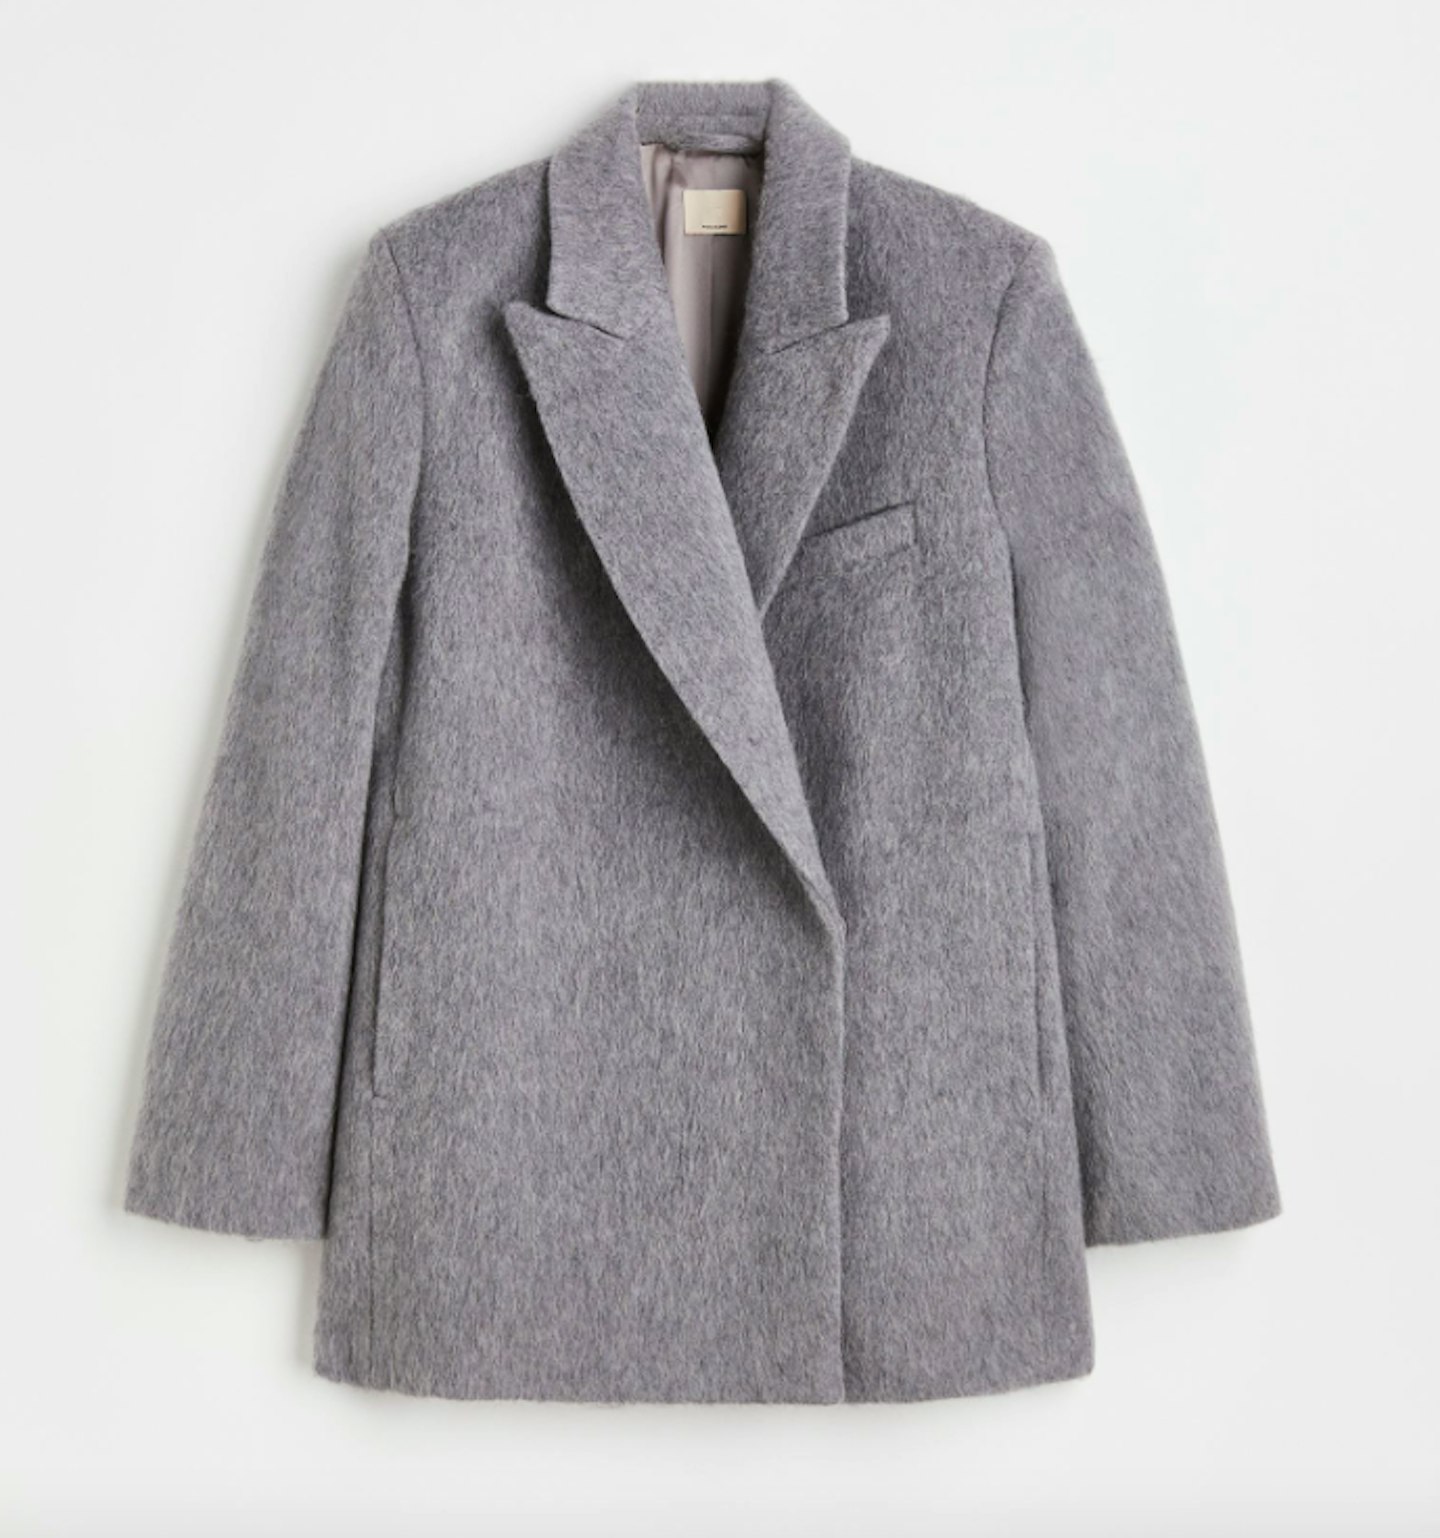 H&M, Wool-Blend Jacket